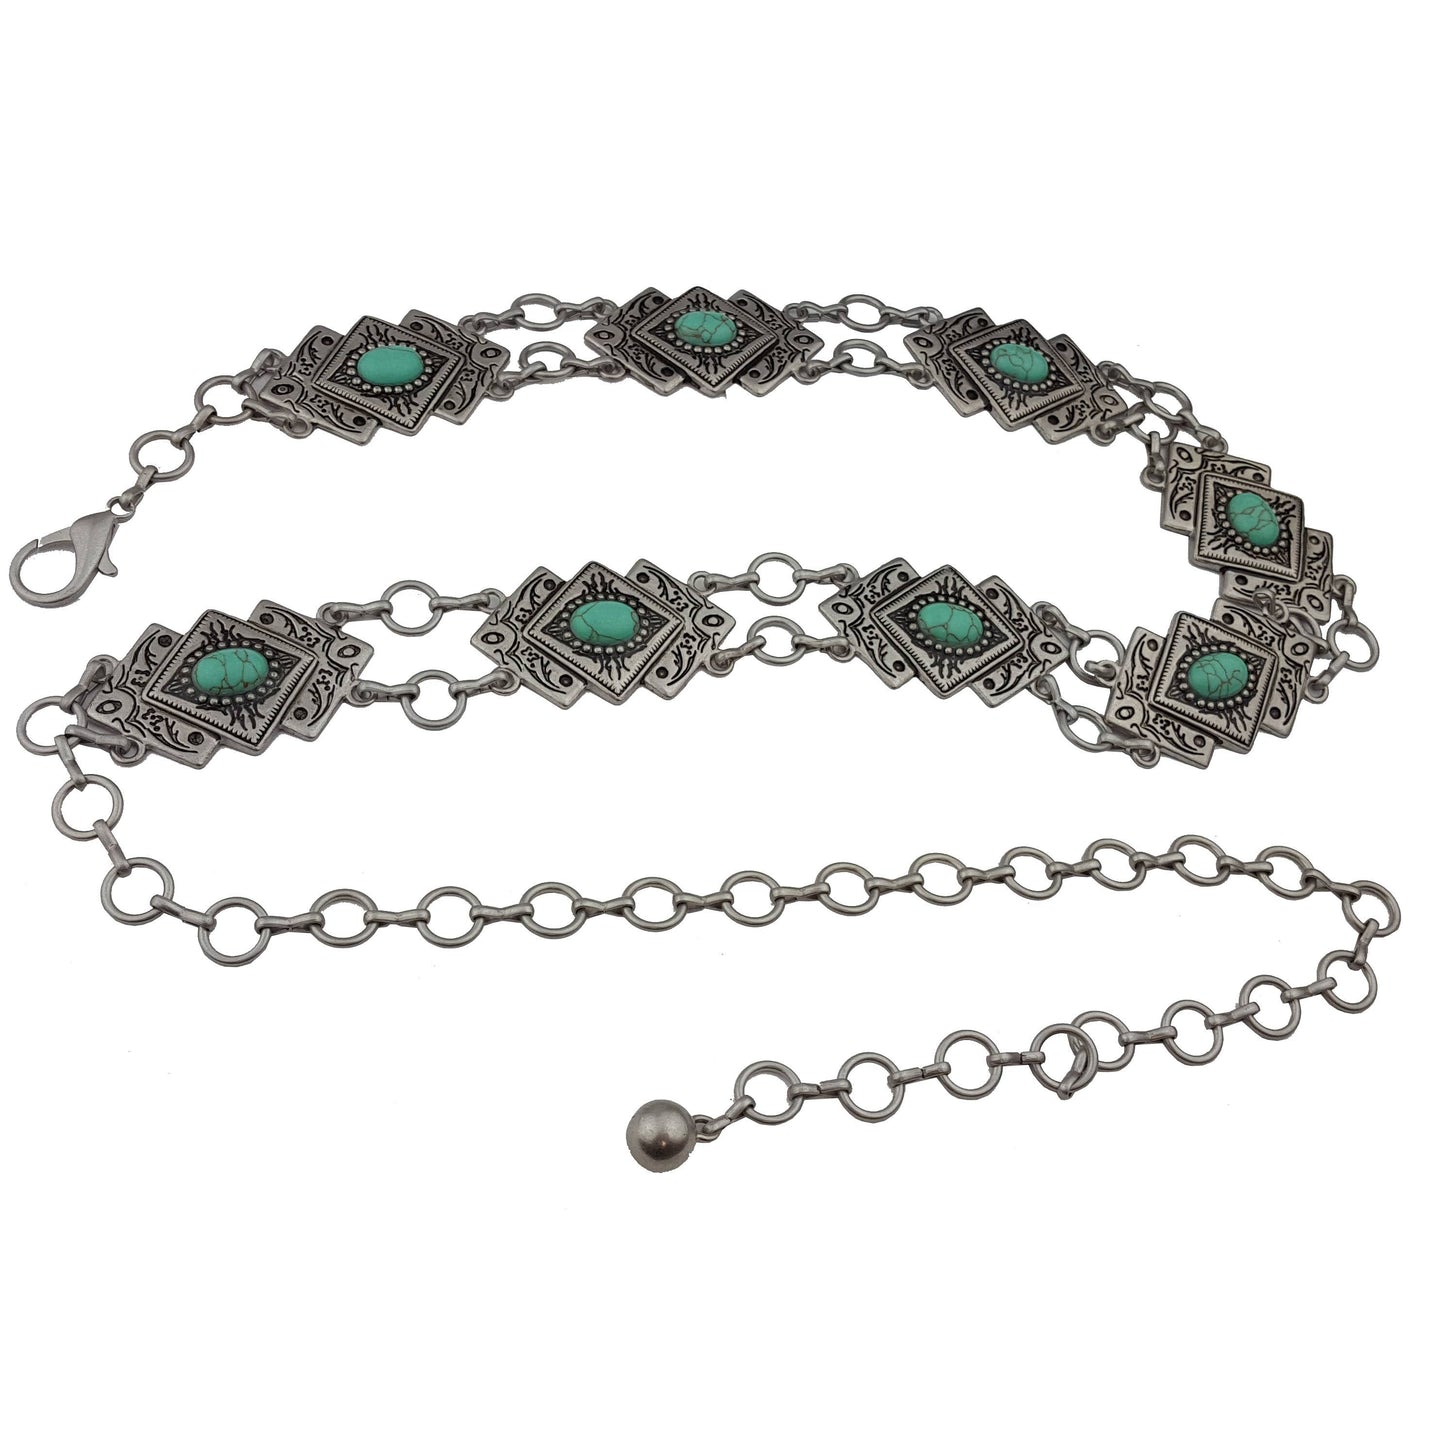 Navajo style silver chain belt